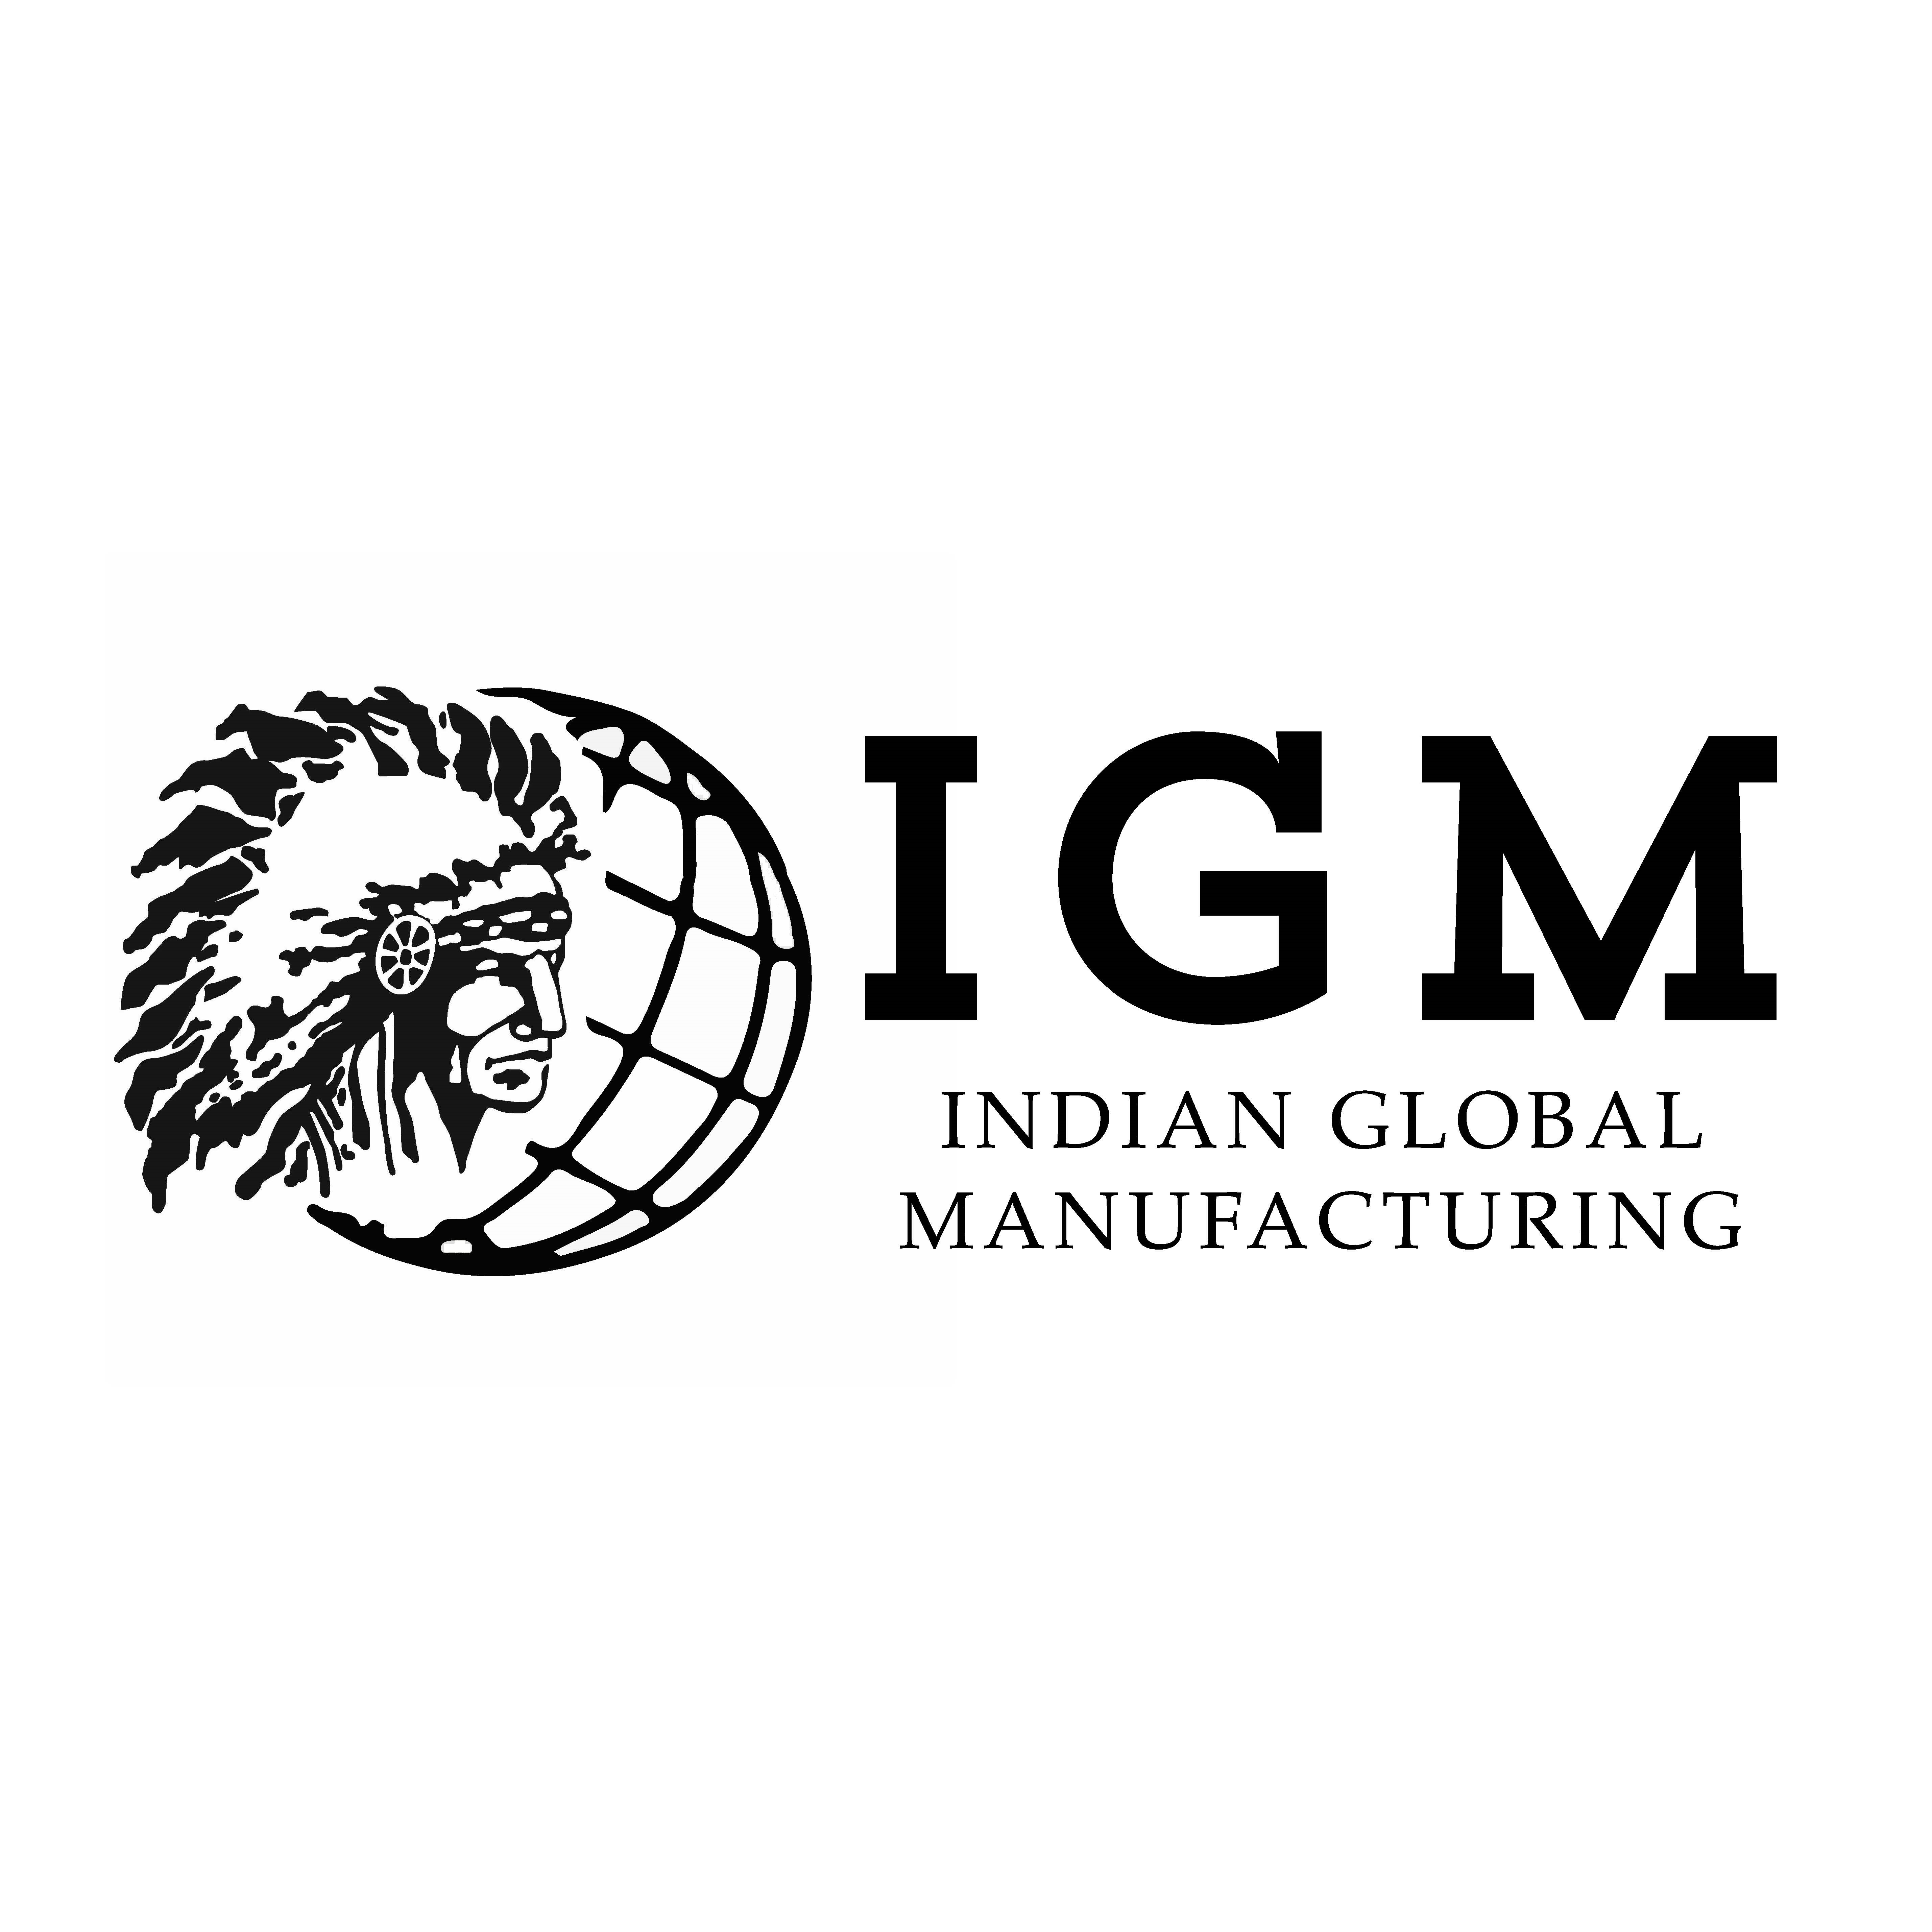 IGM: Indian Global Manufacturing